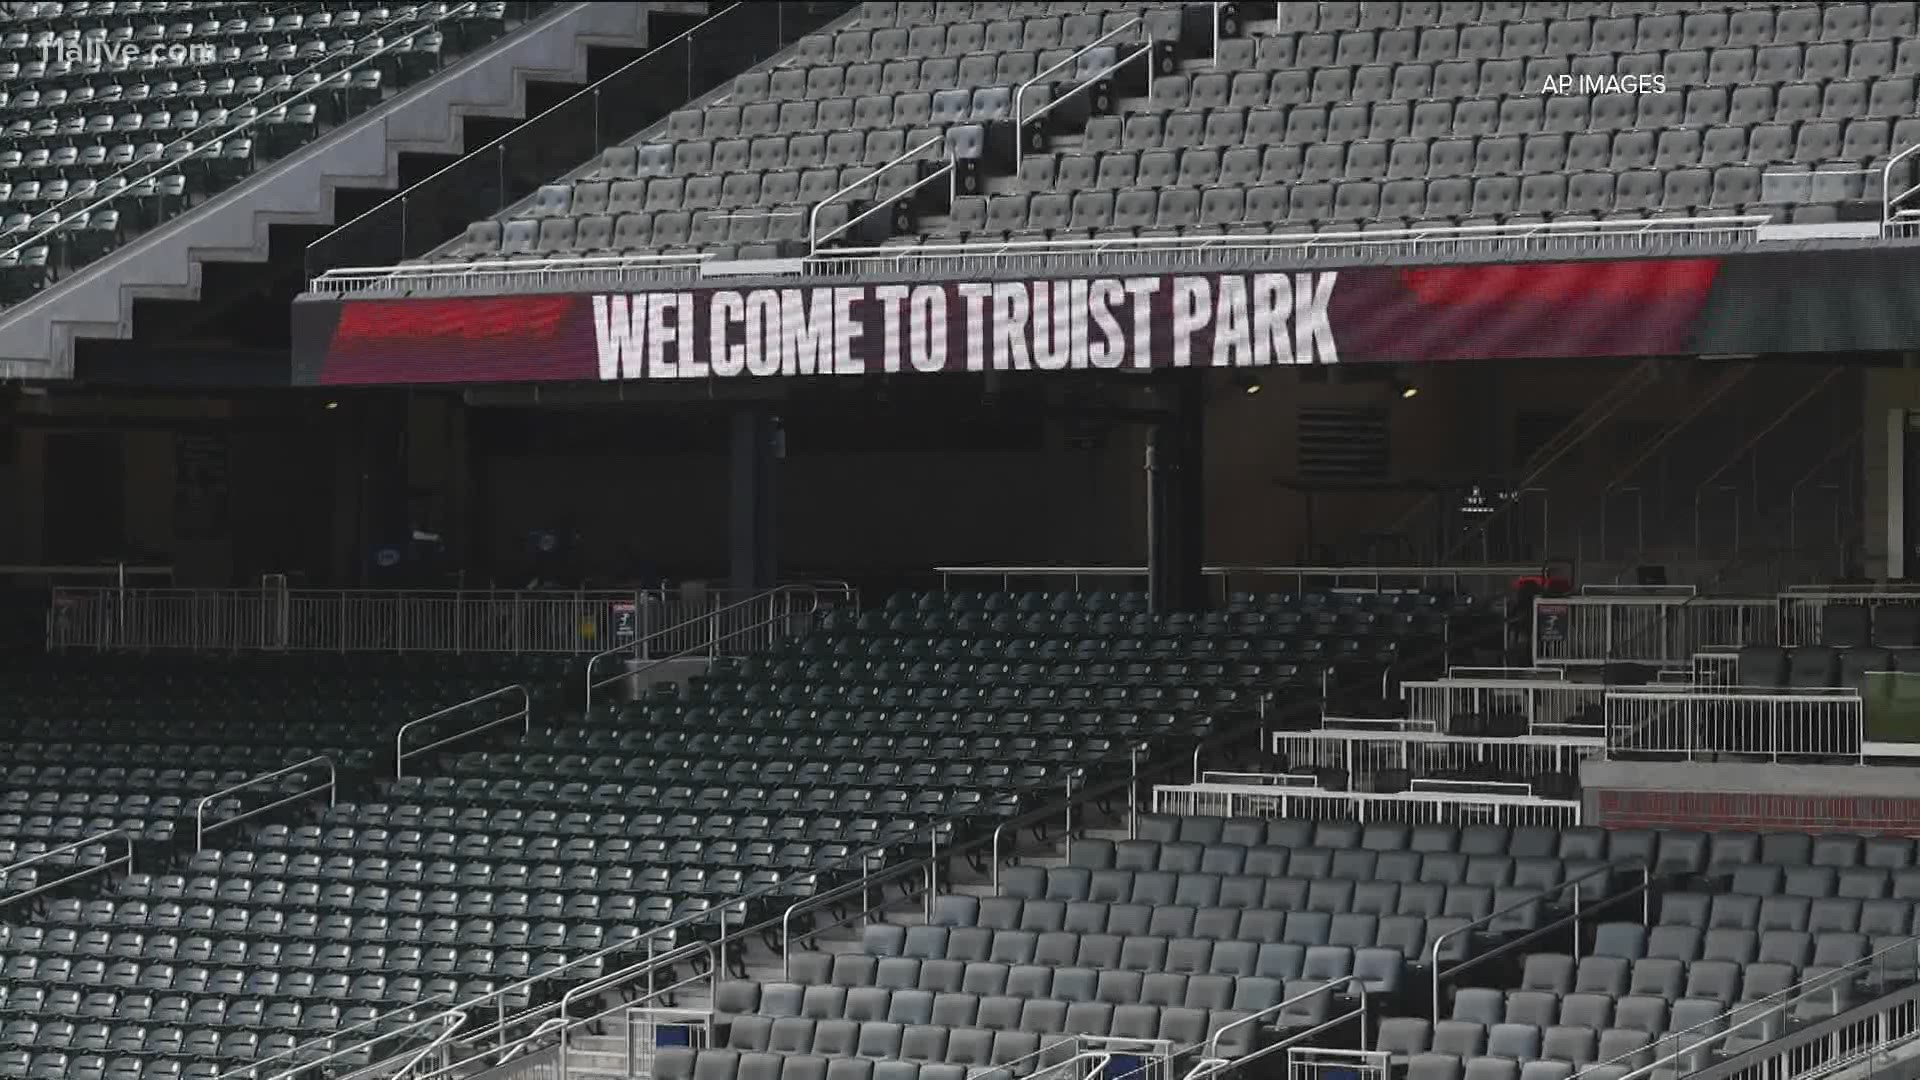 Atlanta Braves stadium seat capacity expands 2021